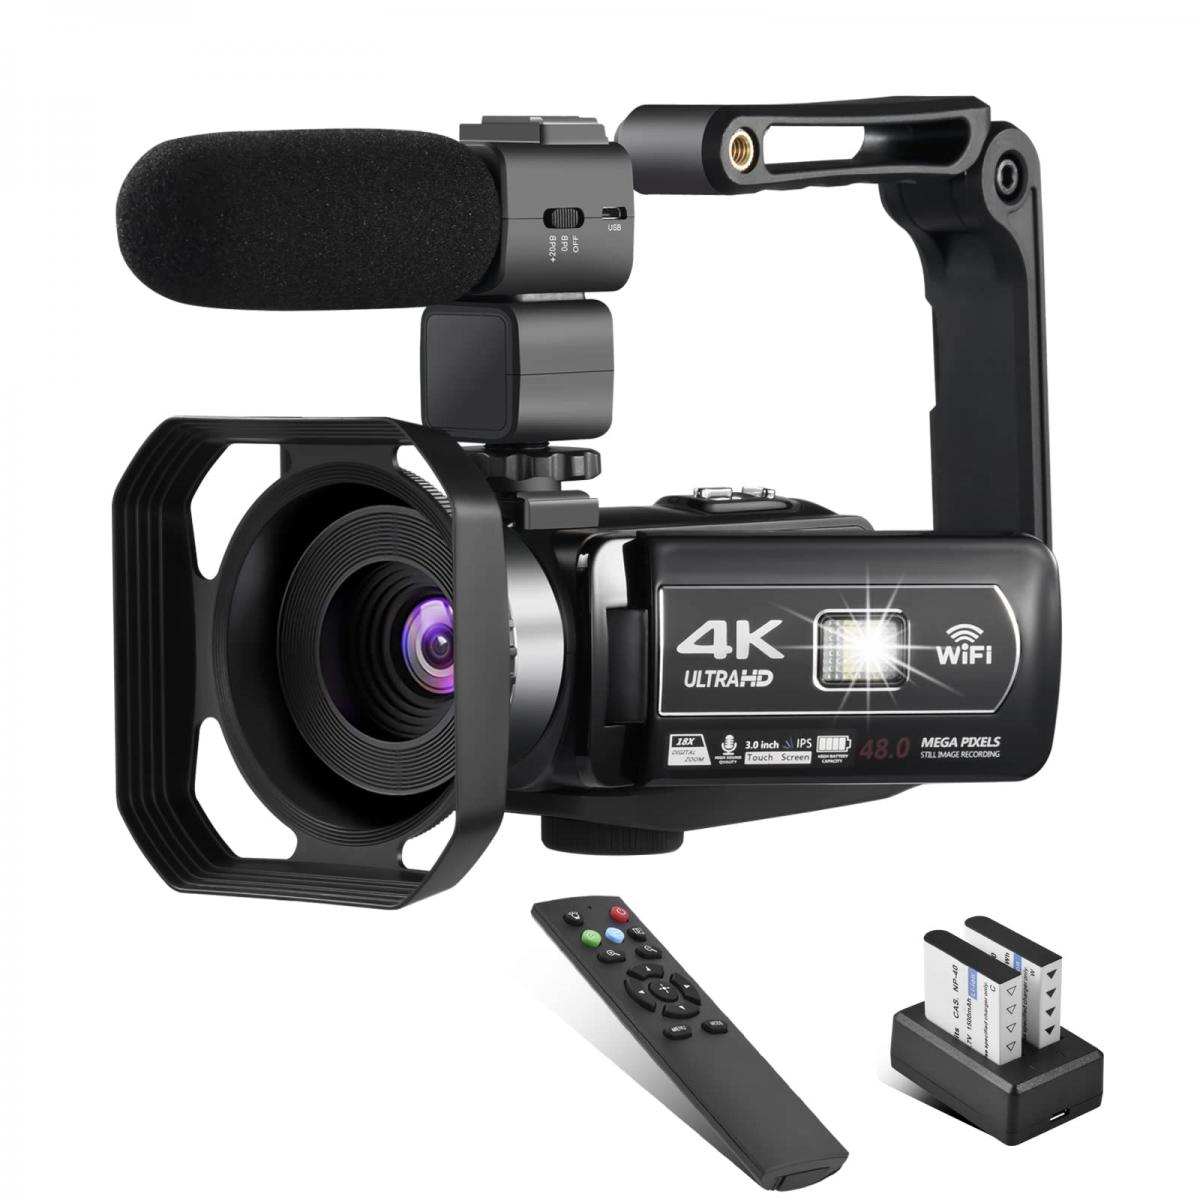 YouTubeウルトラHD 4K  4MPビデオブログ用48kビデオカメラビデオカメラマイクとリモコンWiFiデジタルカメラ3.0インチIPSタッチスクリーンIRナイトビジョン2バッテリー